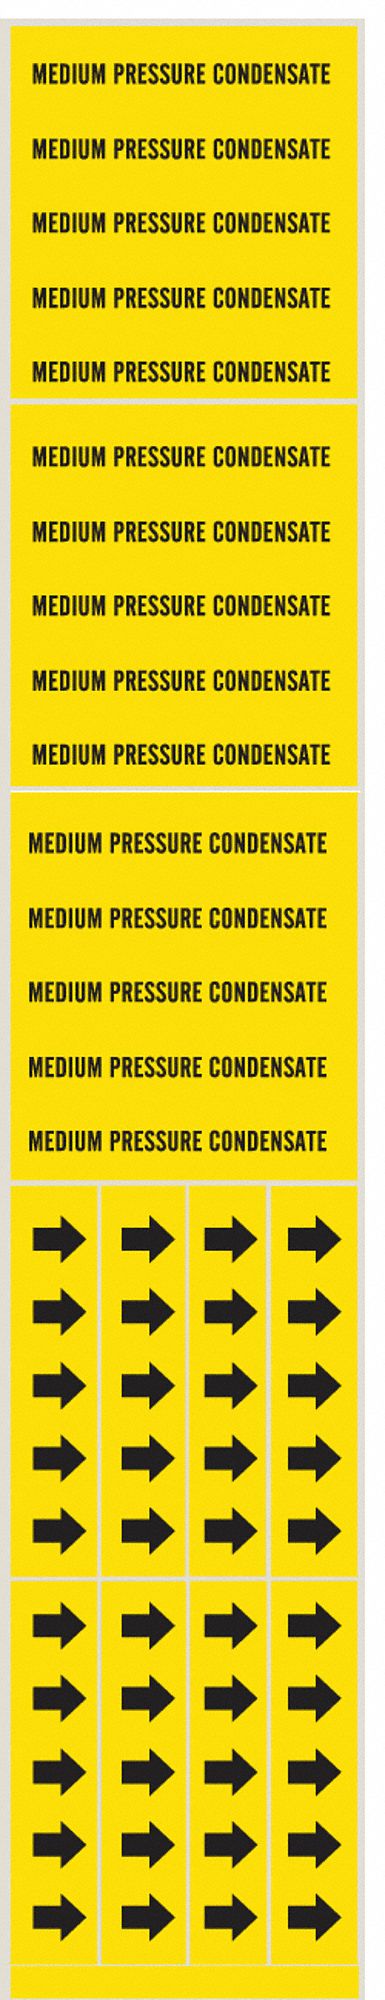 Pipe Marker,Medium Pressure Condensate,Y